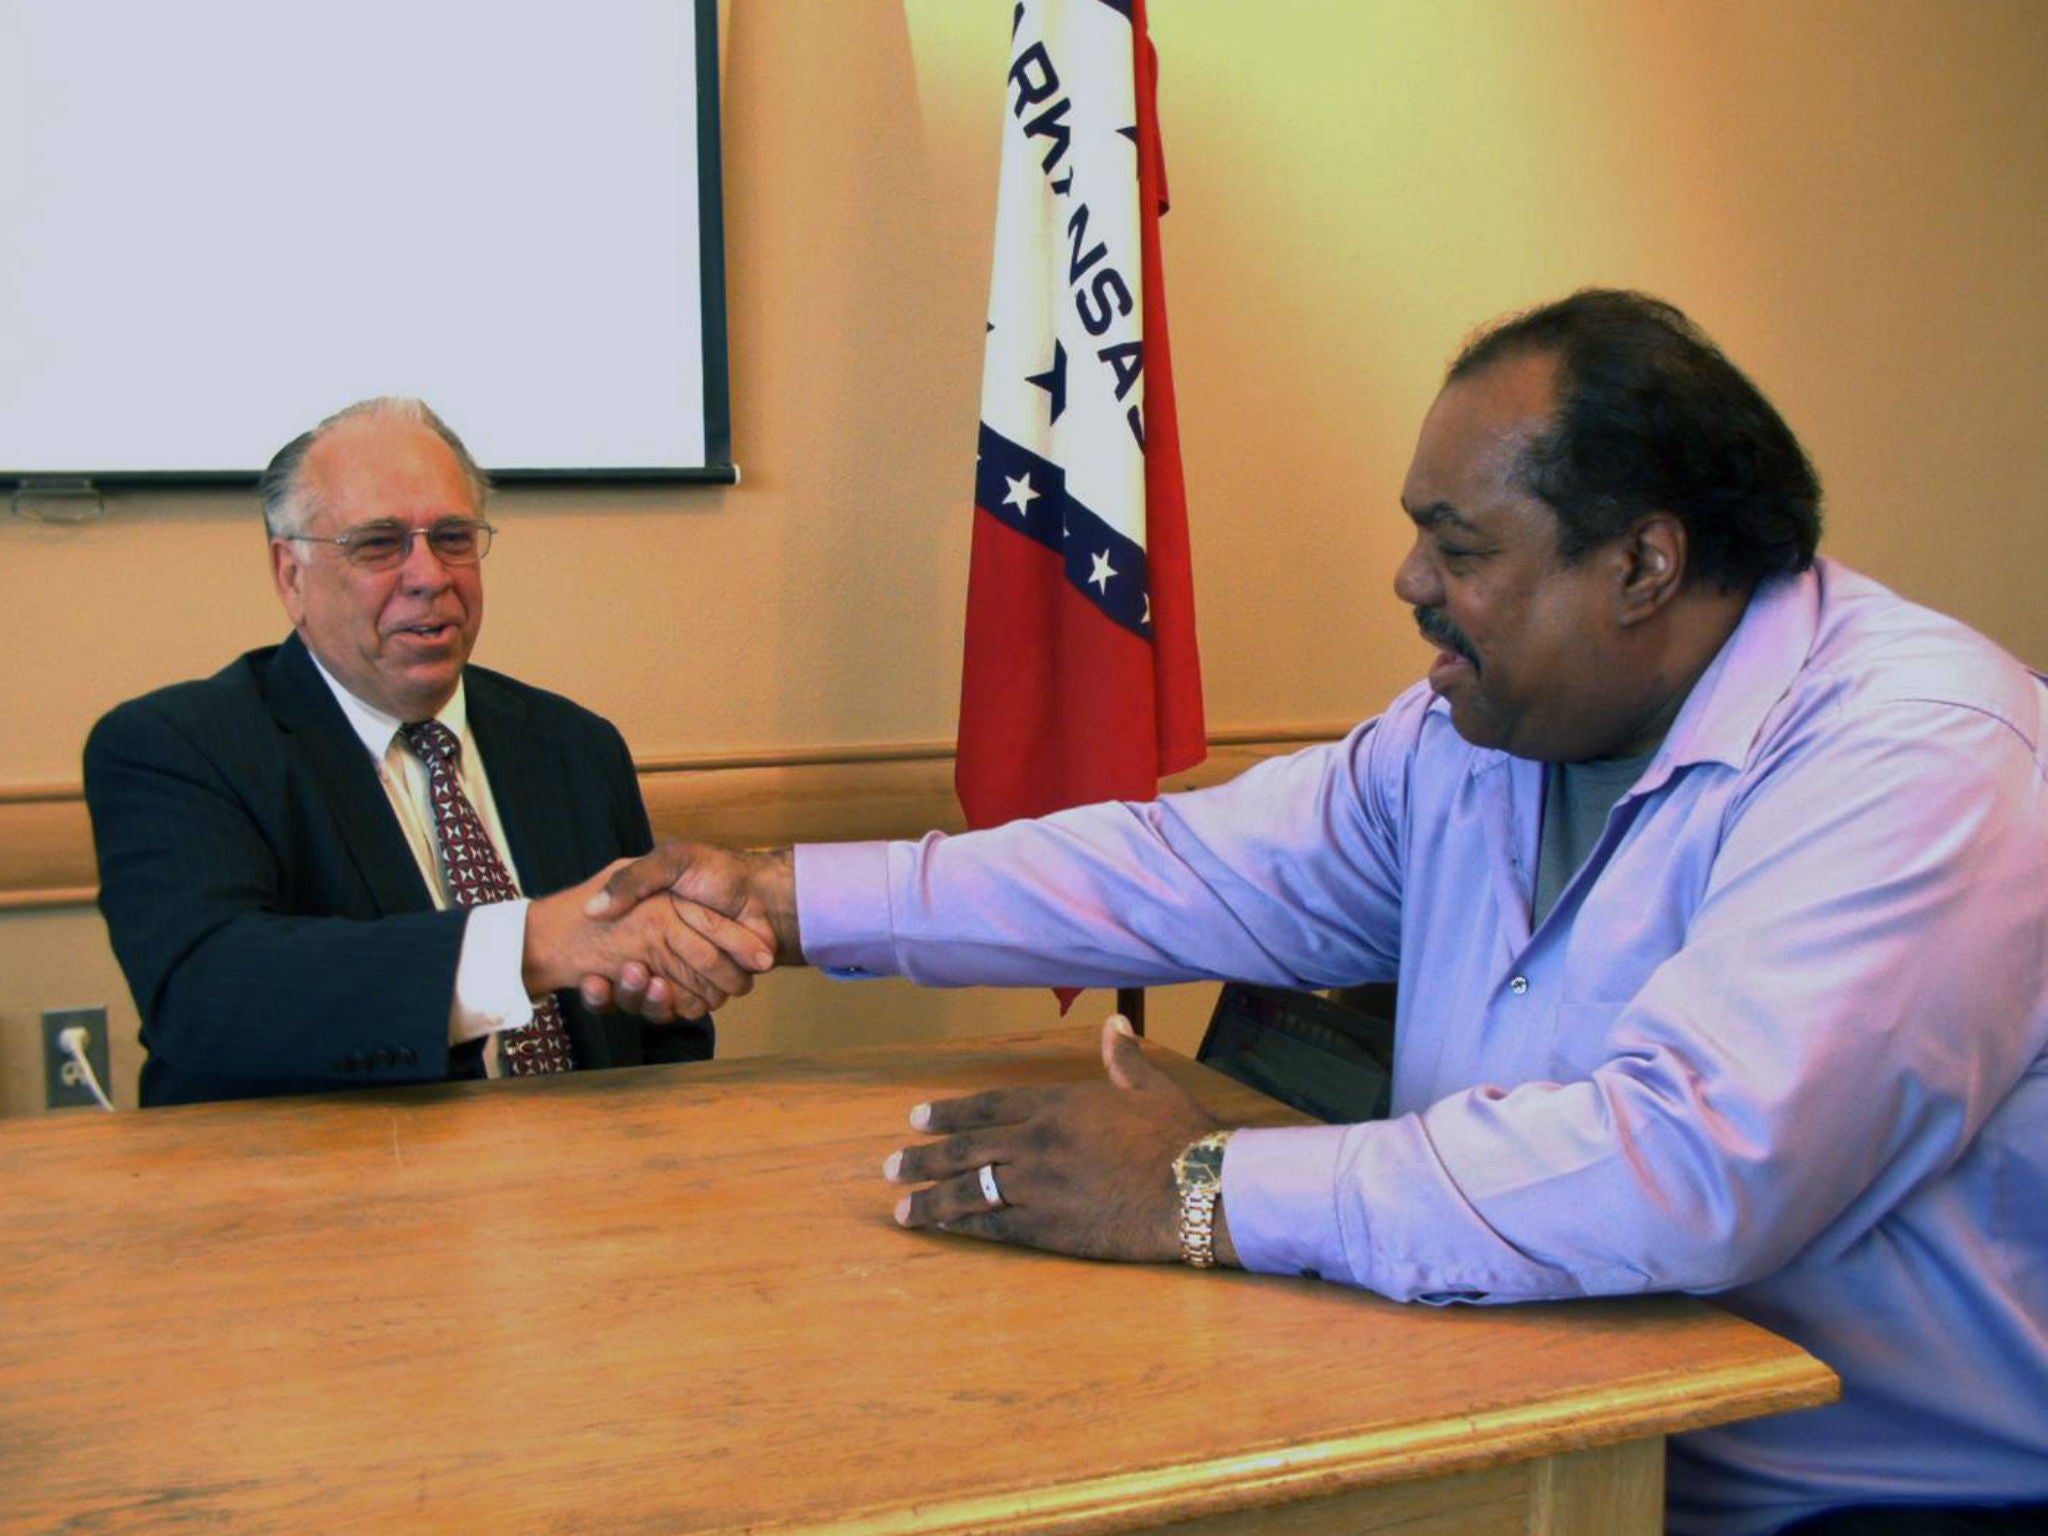 Daryl Davis meeting with Pastor Thomas Robb, National Director, Knights of the Klu Klux Klan